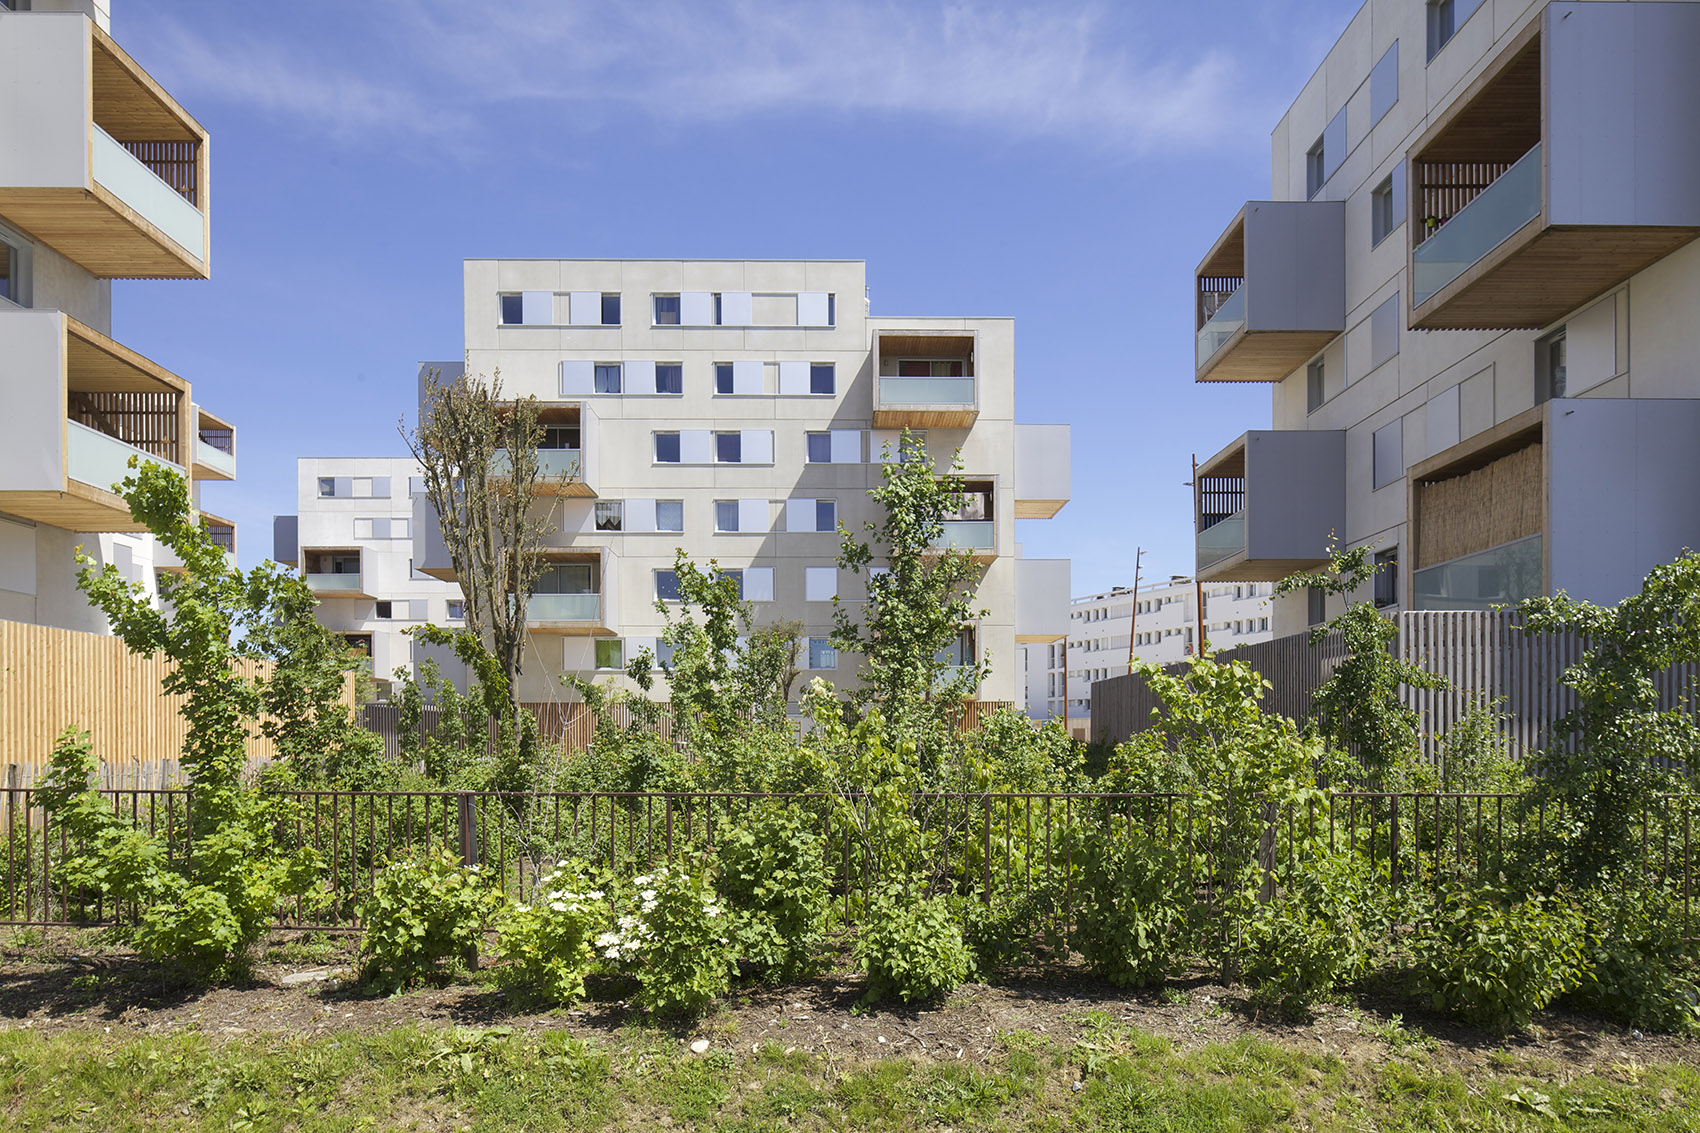 Square Maïmat住宅区更新，法国/释放公共空间，连接社区居民-76